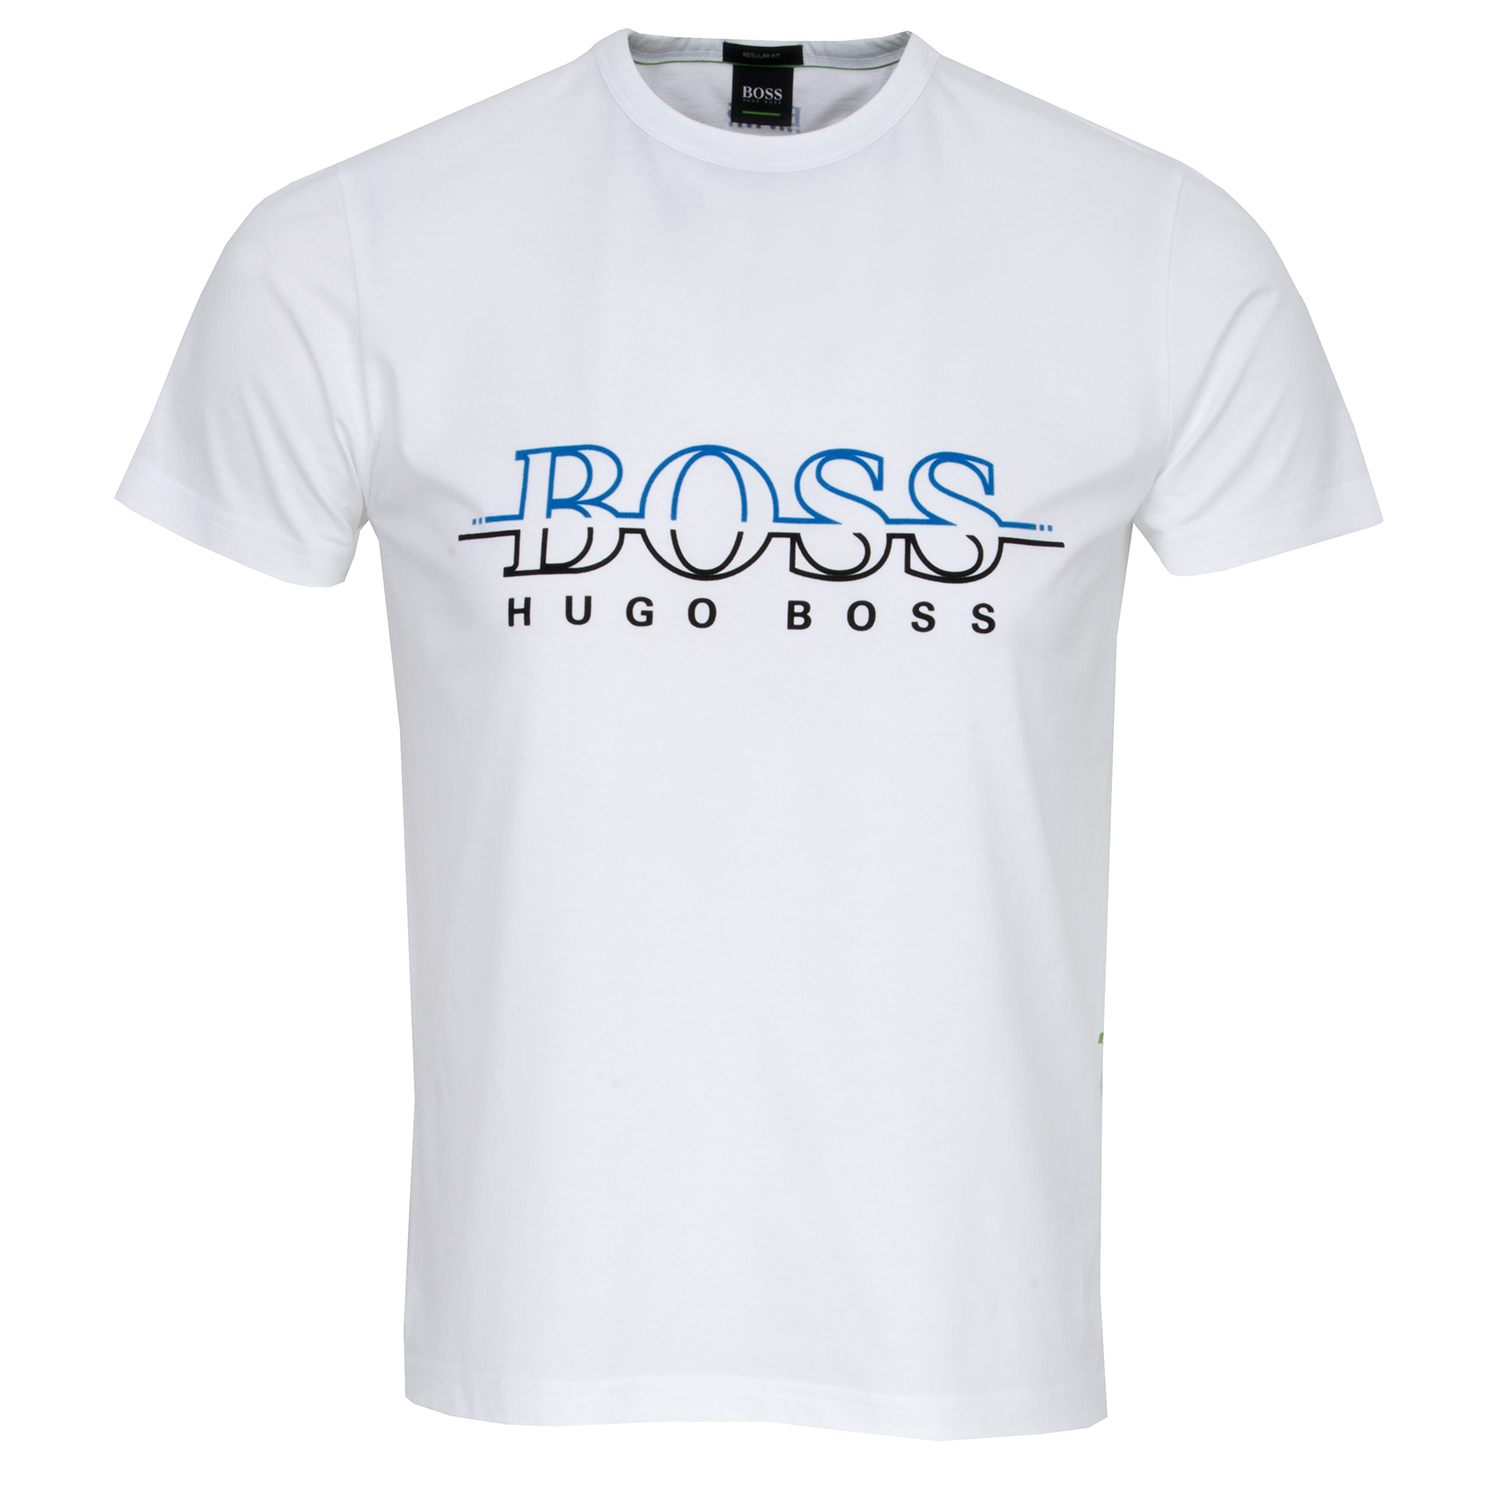 hugo boss athleisure shirt | Sale OFF-53%